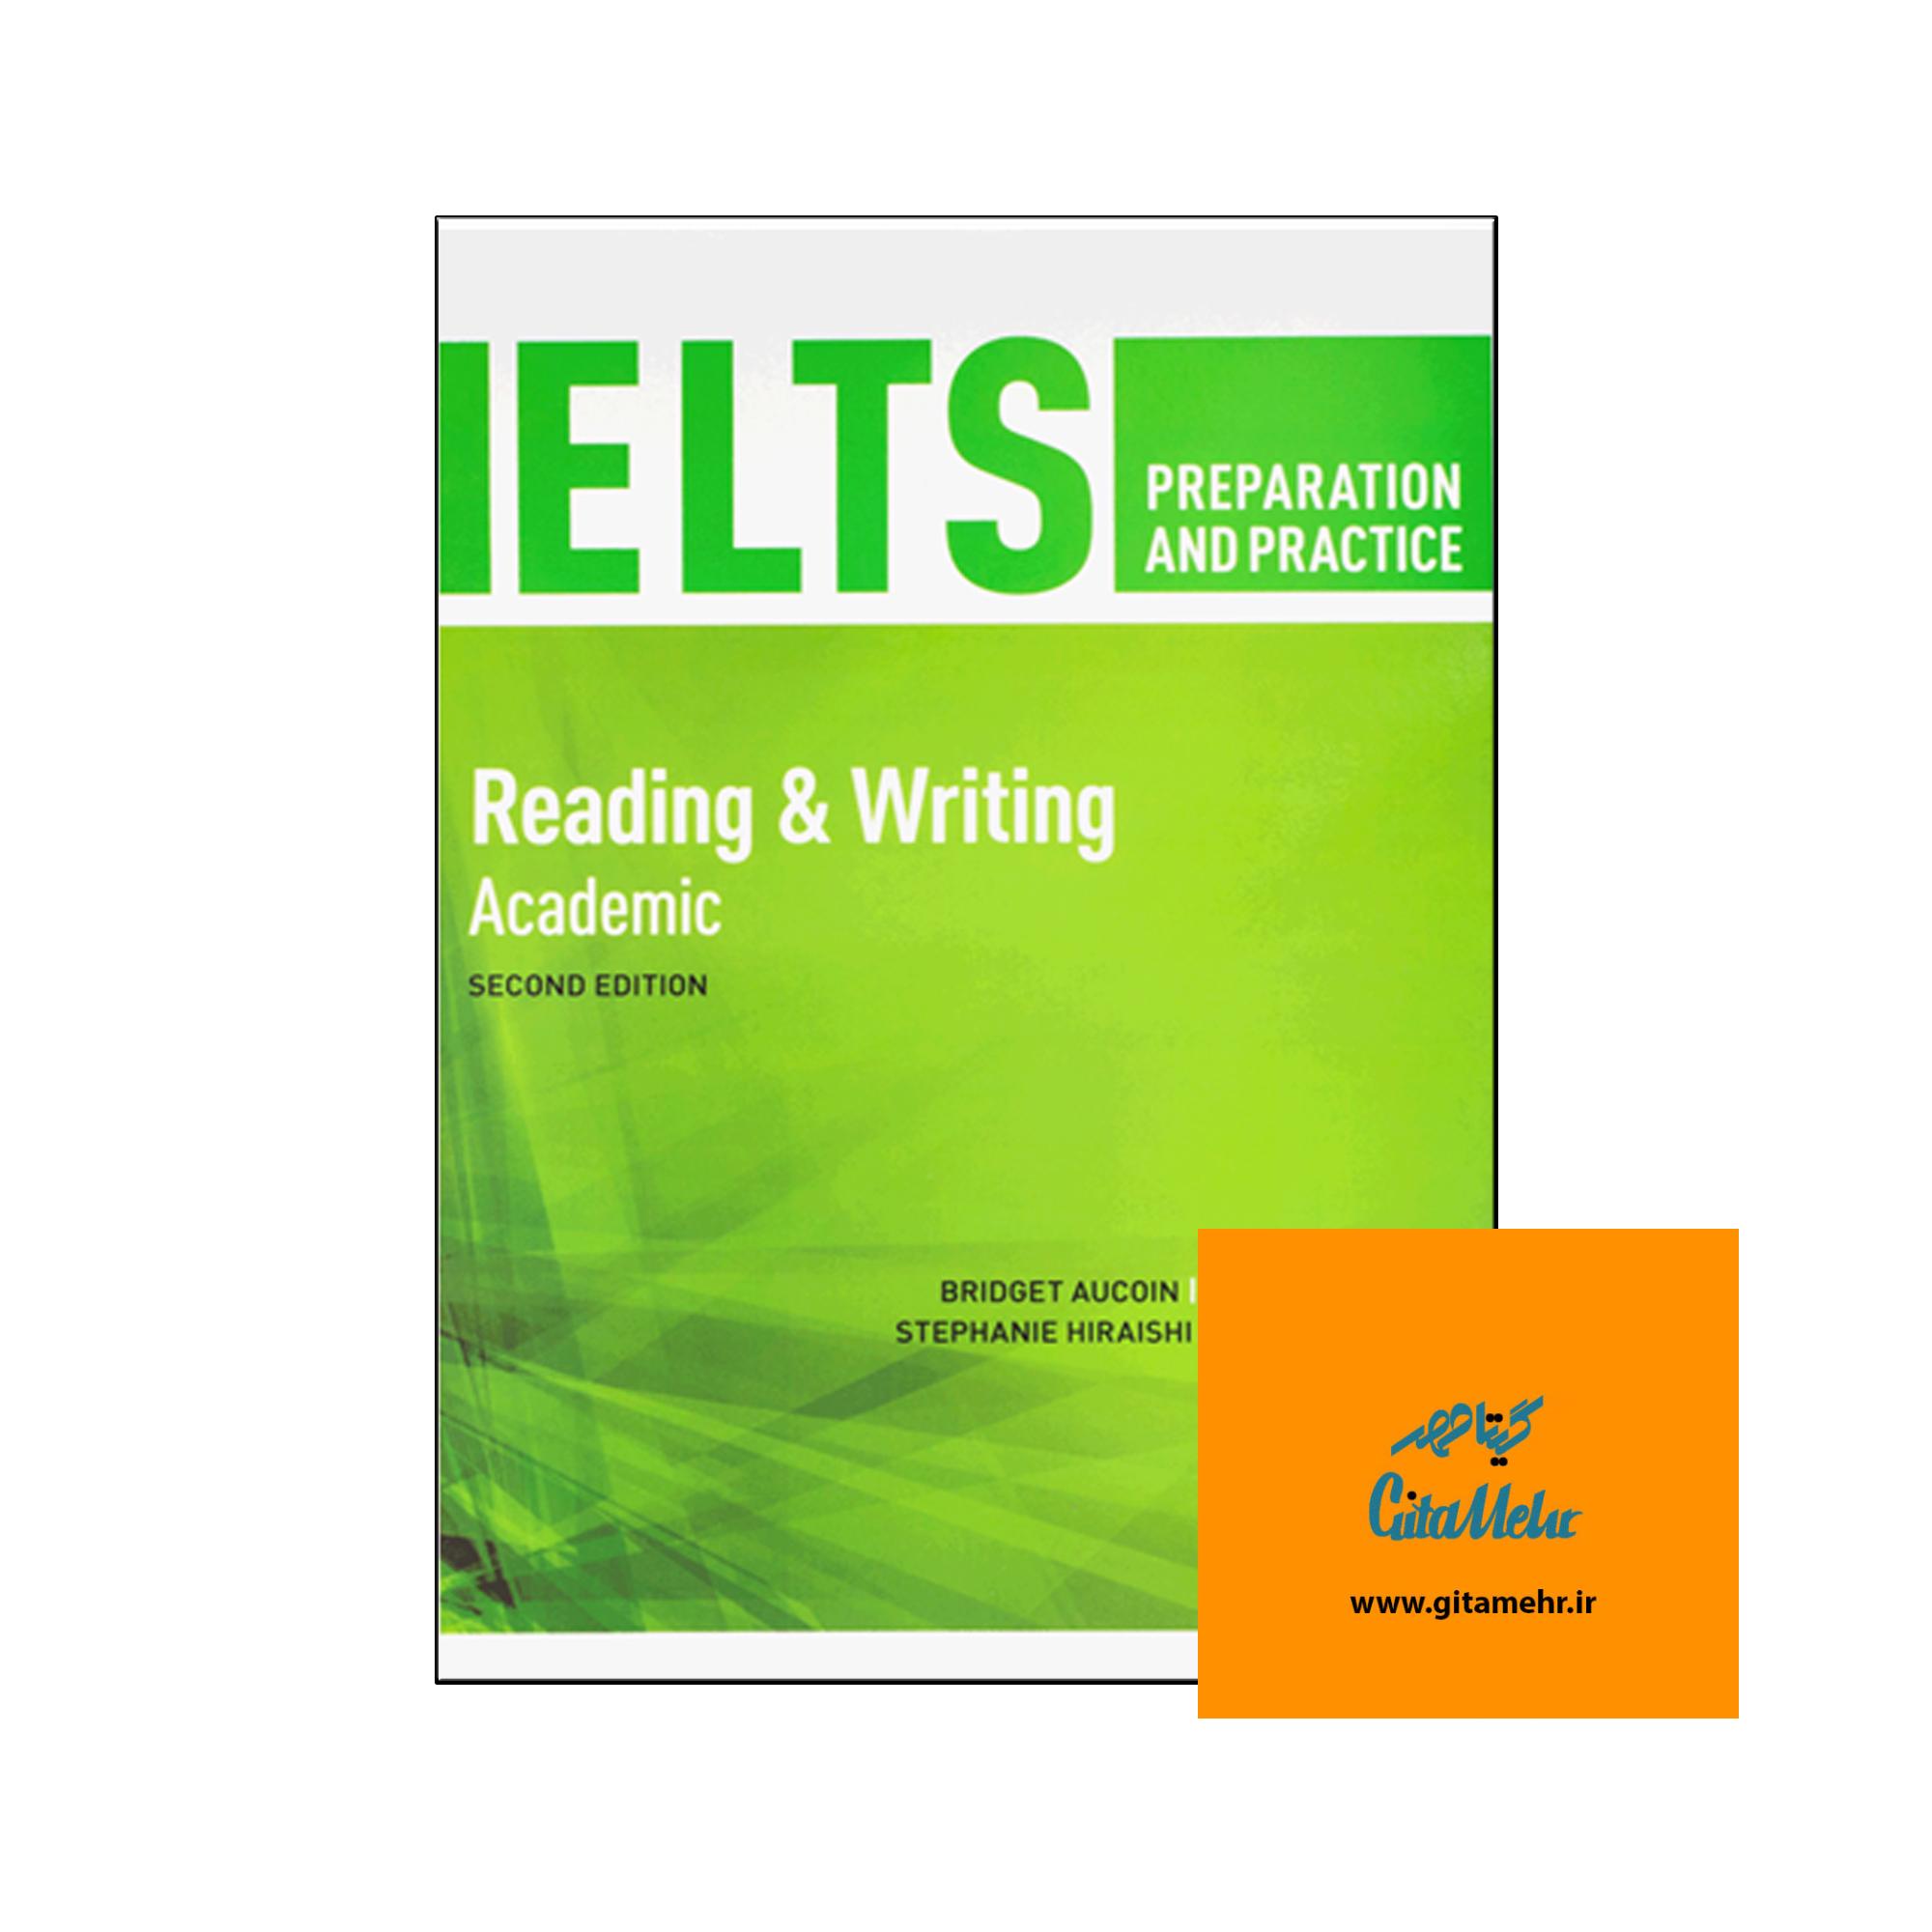 ielts preparation and practice 2ndreading writingacademic 65f1c52451ccc